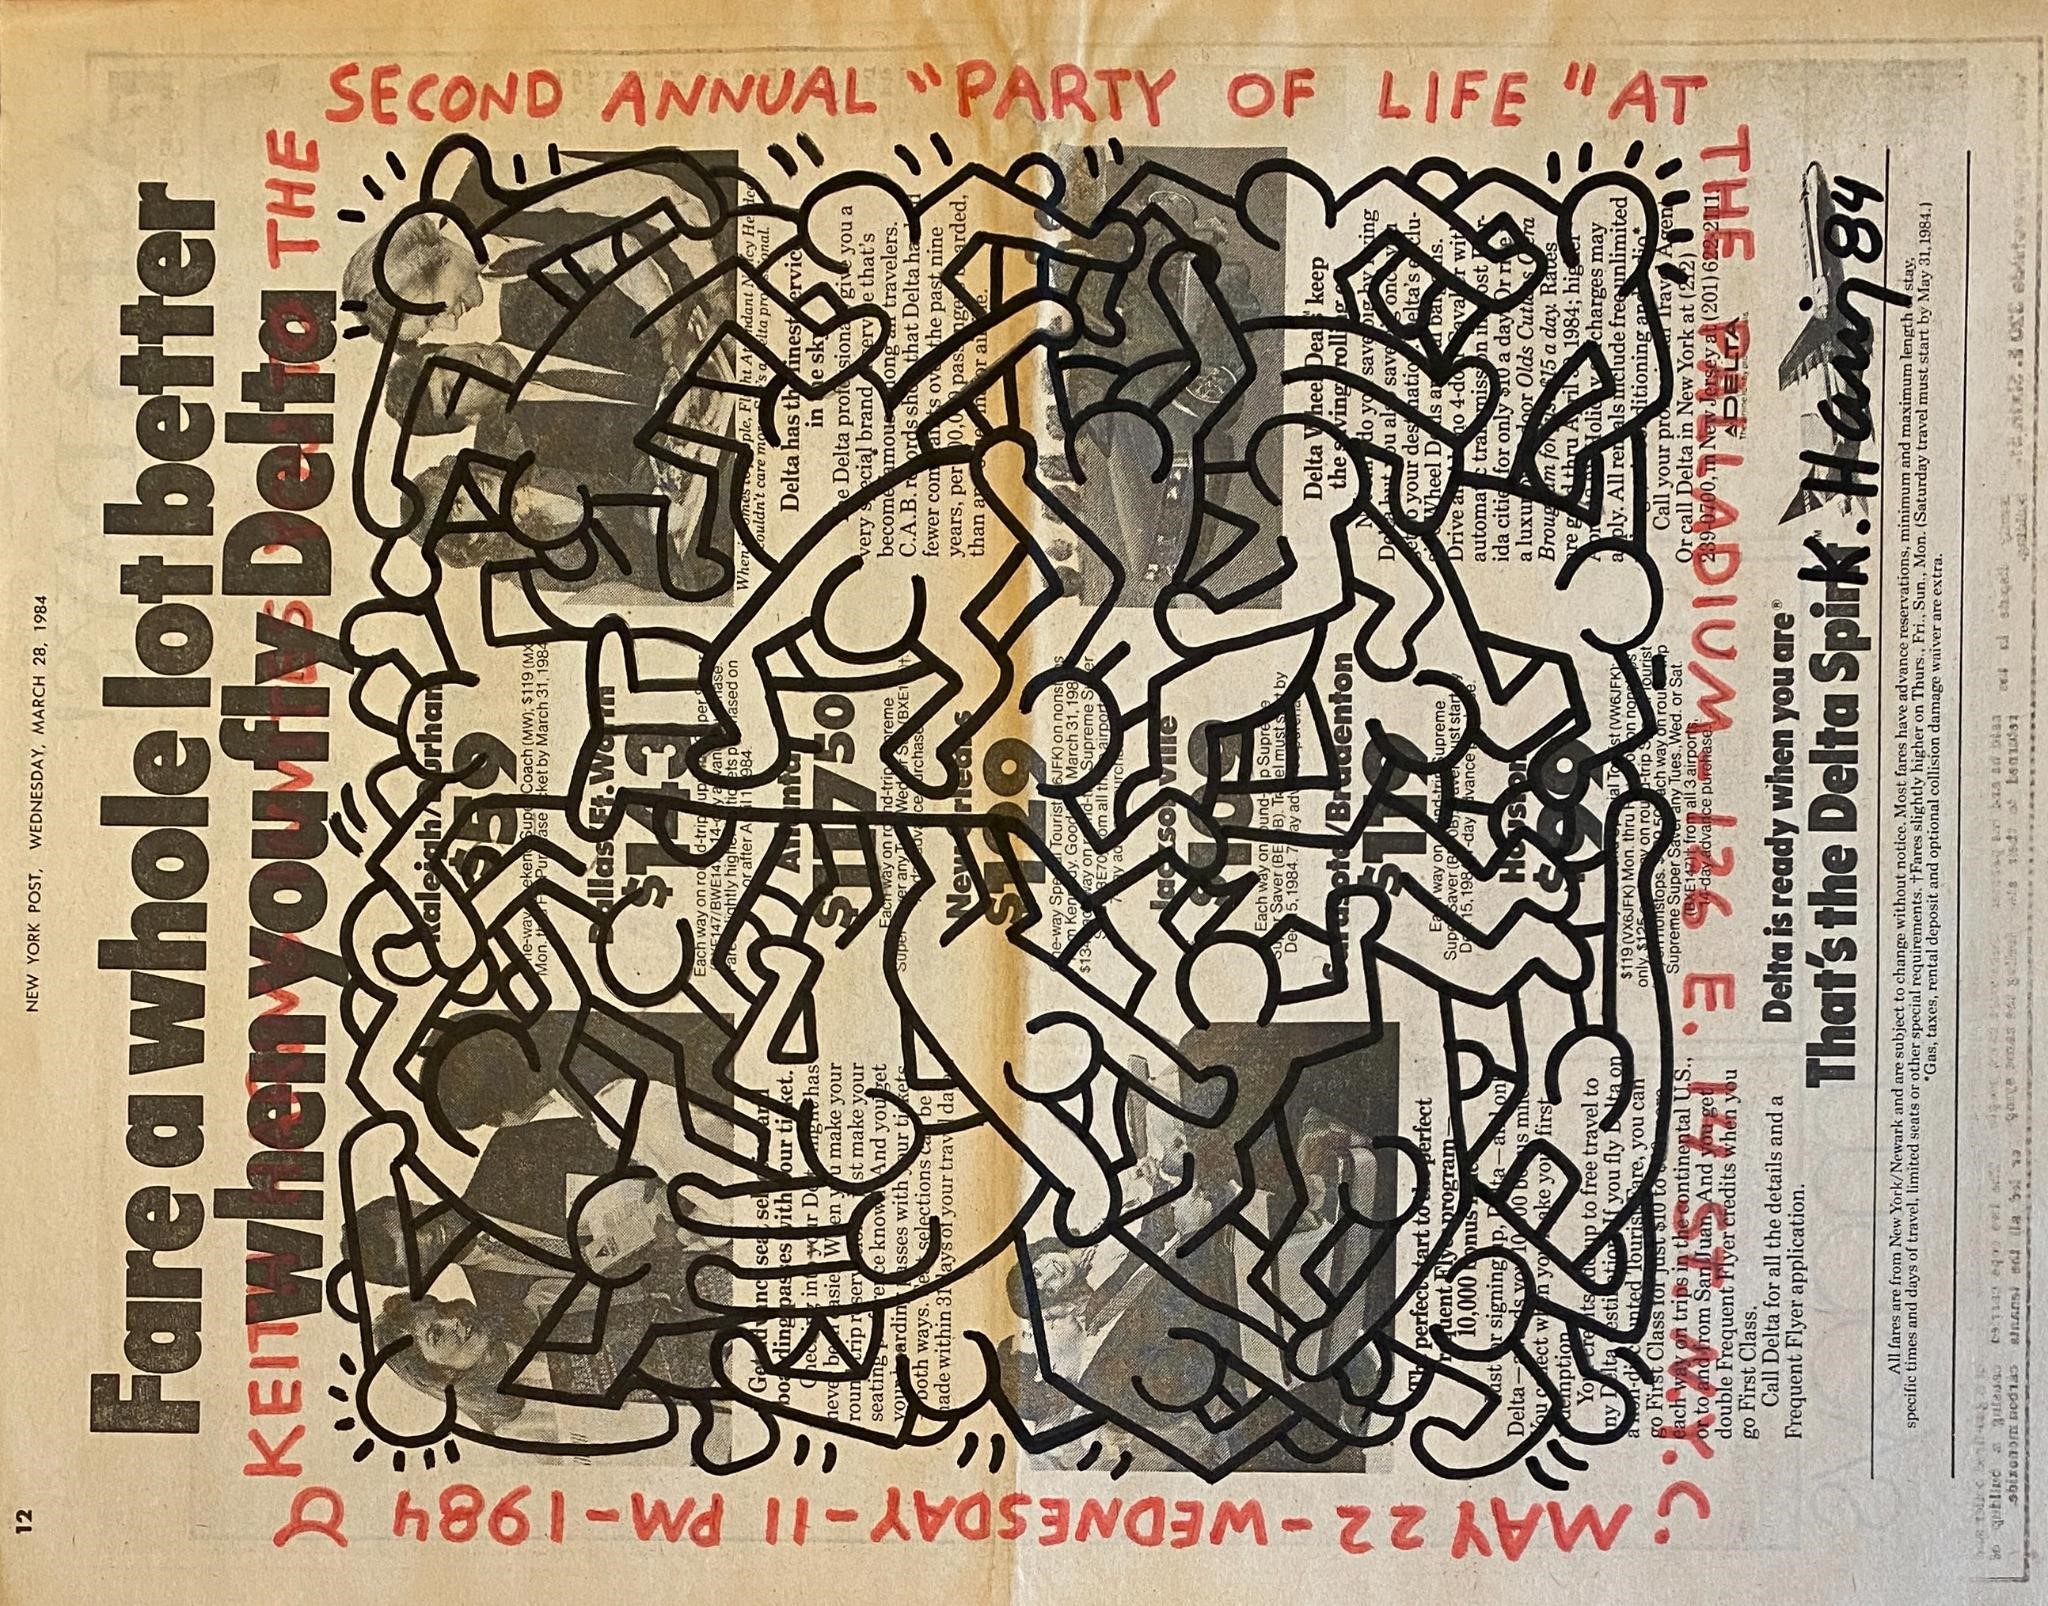 Keith Haring Original Newspaper drawing Certified